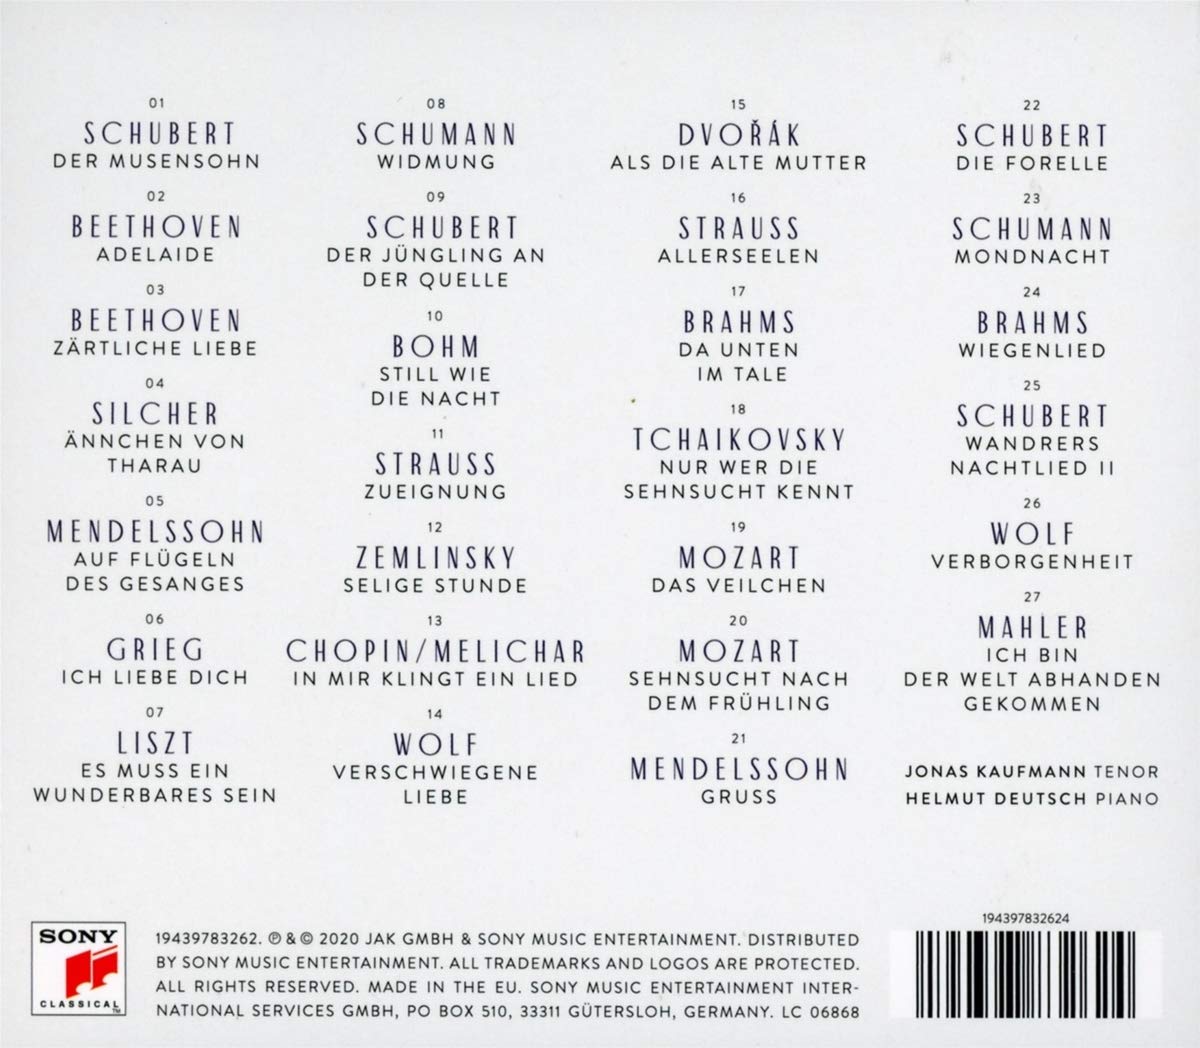 Jonas Kaufmann 요나스 카우프만 로맨틱 가곡 모음집 '축복의 시간' (Romantic Songs - Selige Stunde)